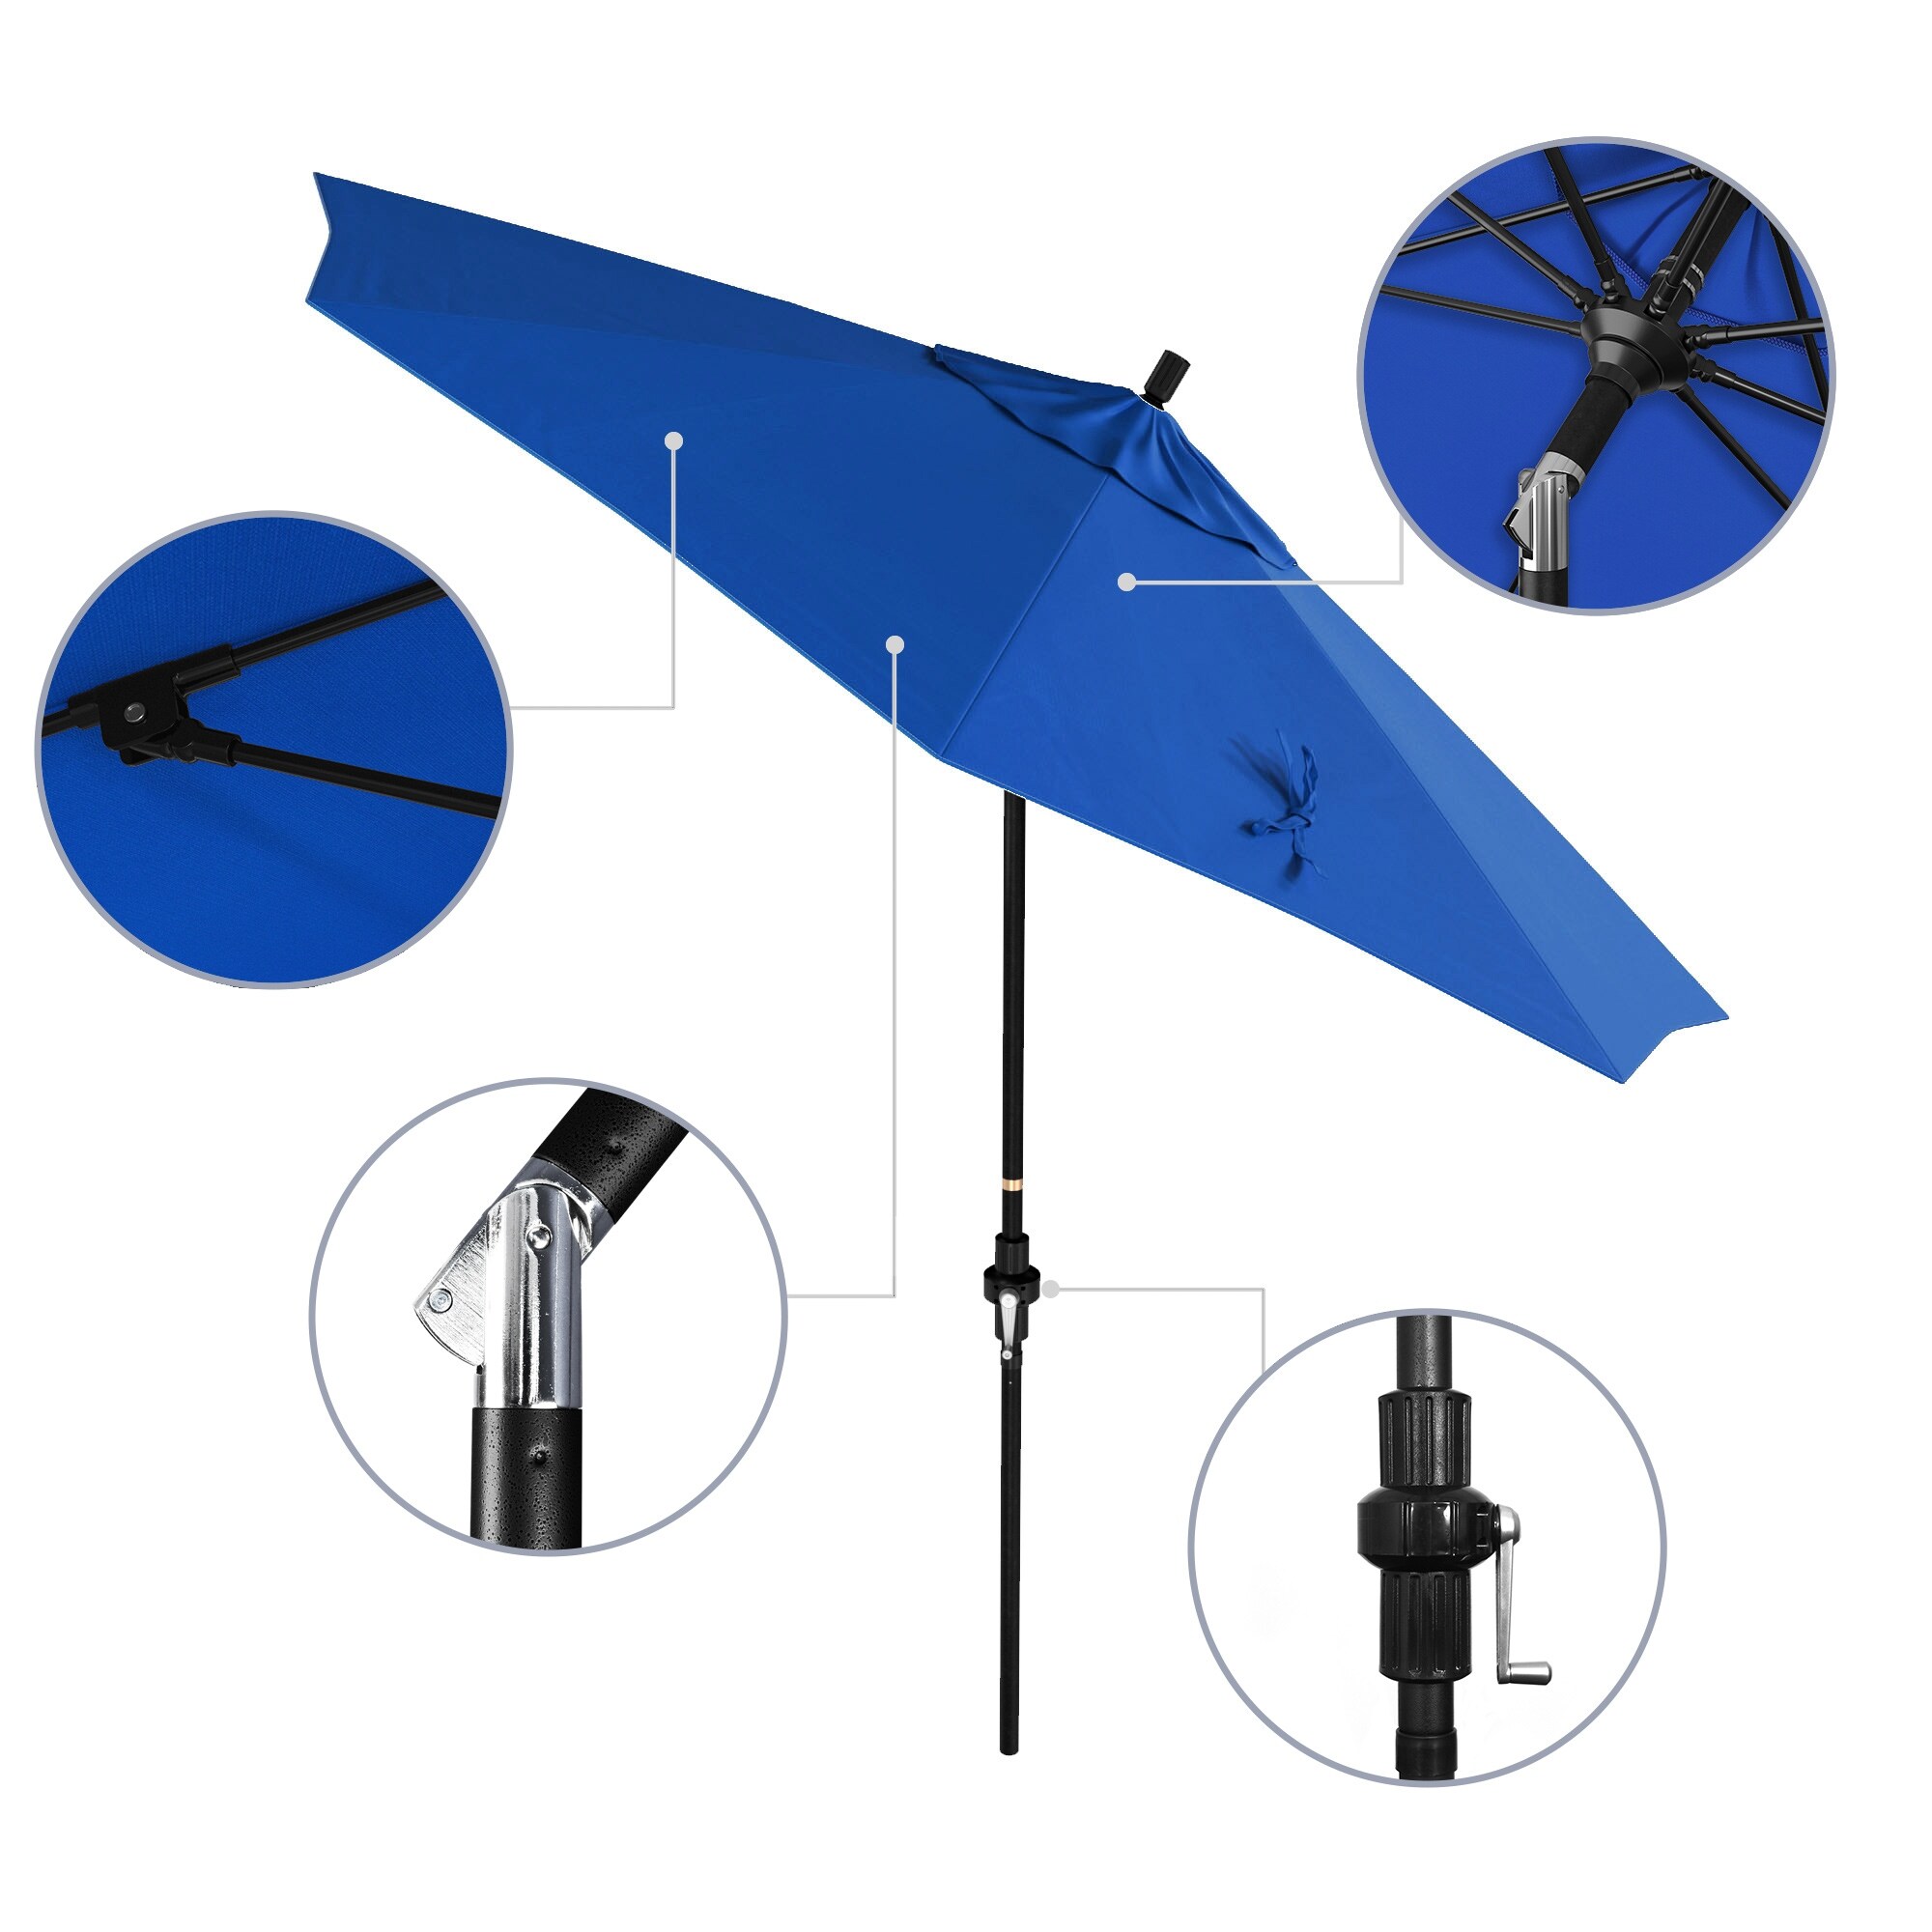 California Umbrella 9' Patio Umbrella in Royal Blue - image 2 of 5